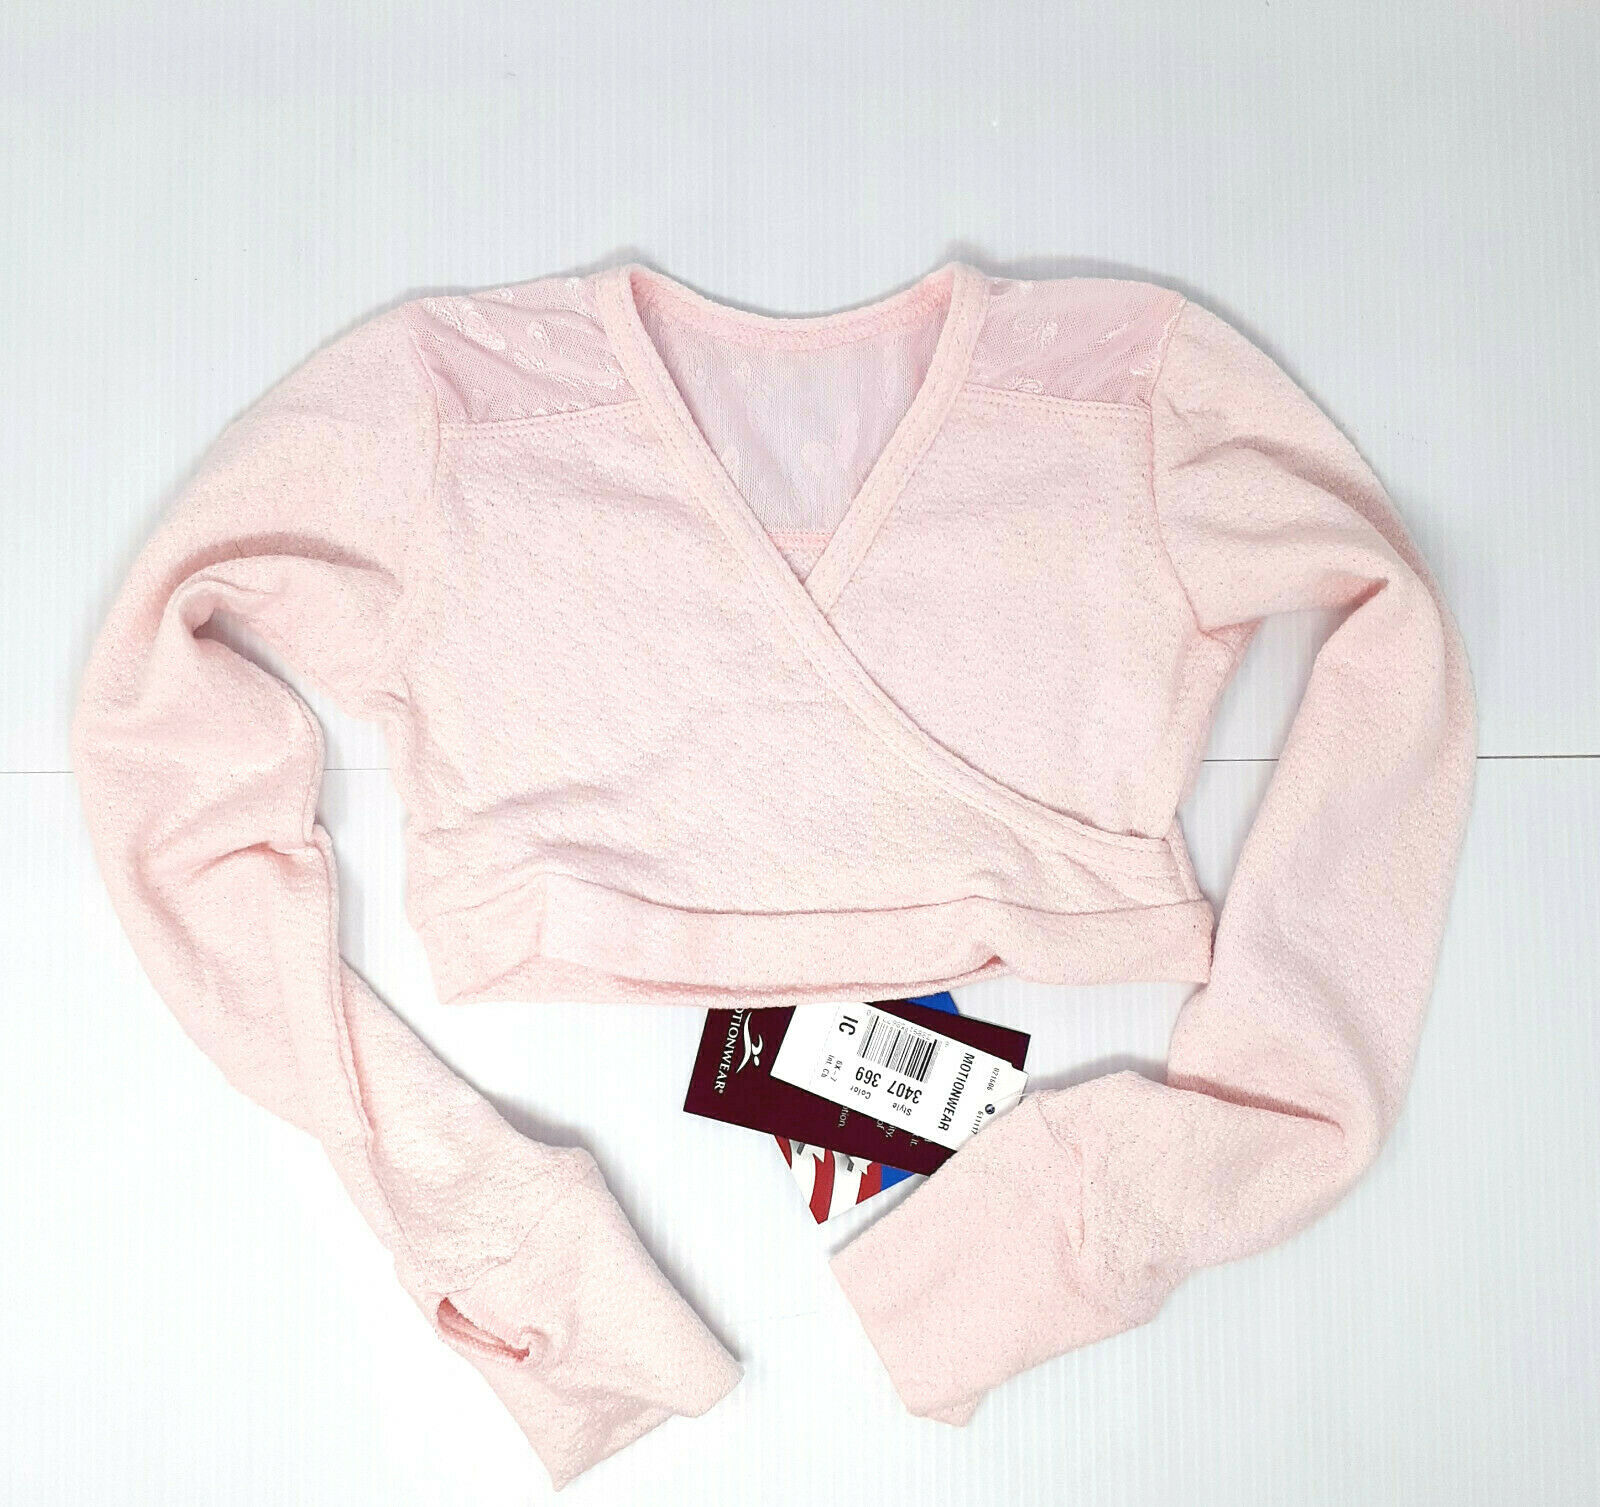 New Girls Motionwear Style # 3407 Pink Cotton Nylon Butterfly Midriff Dance Top